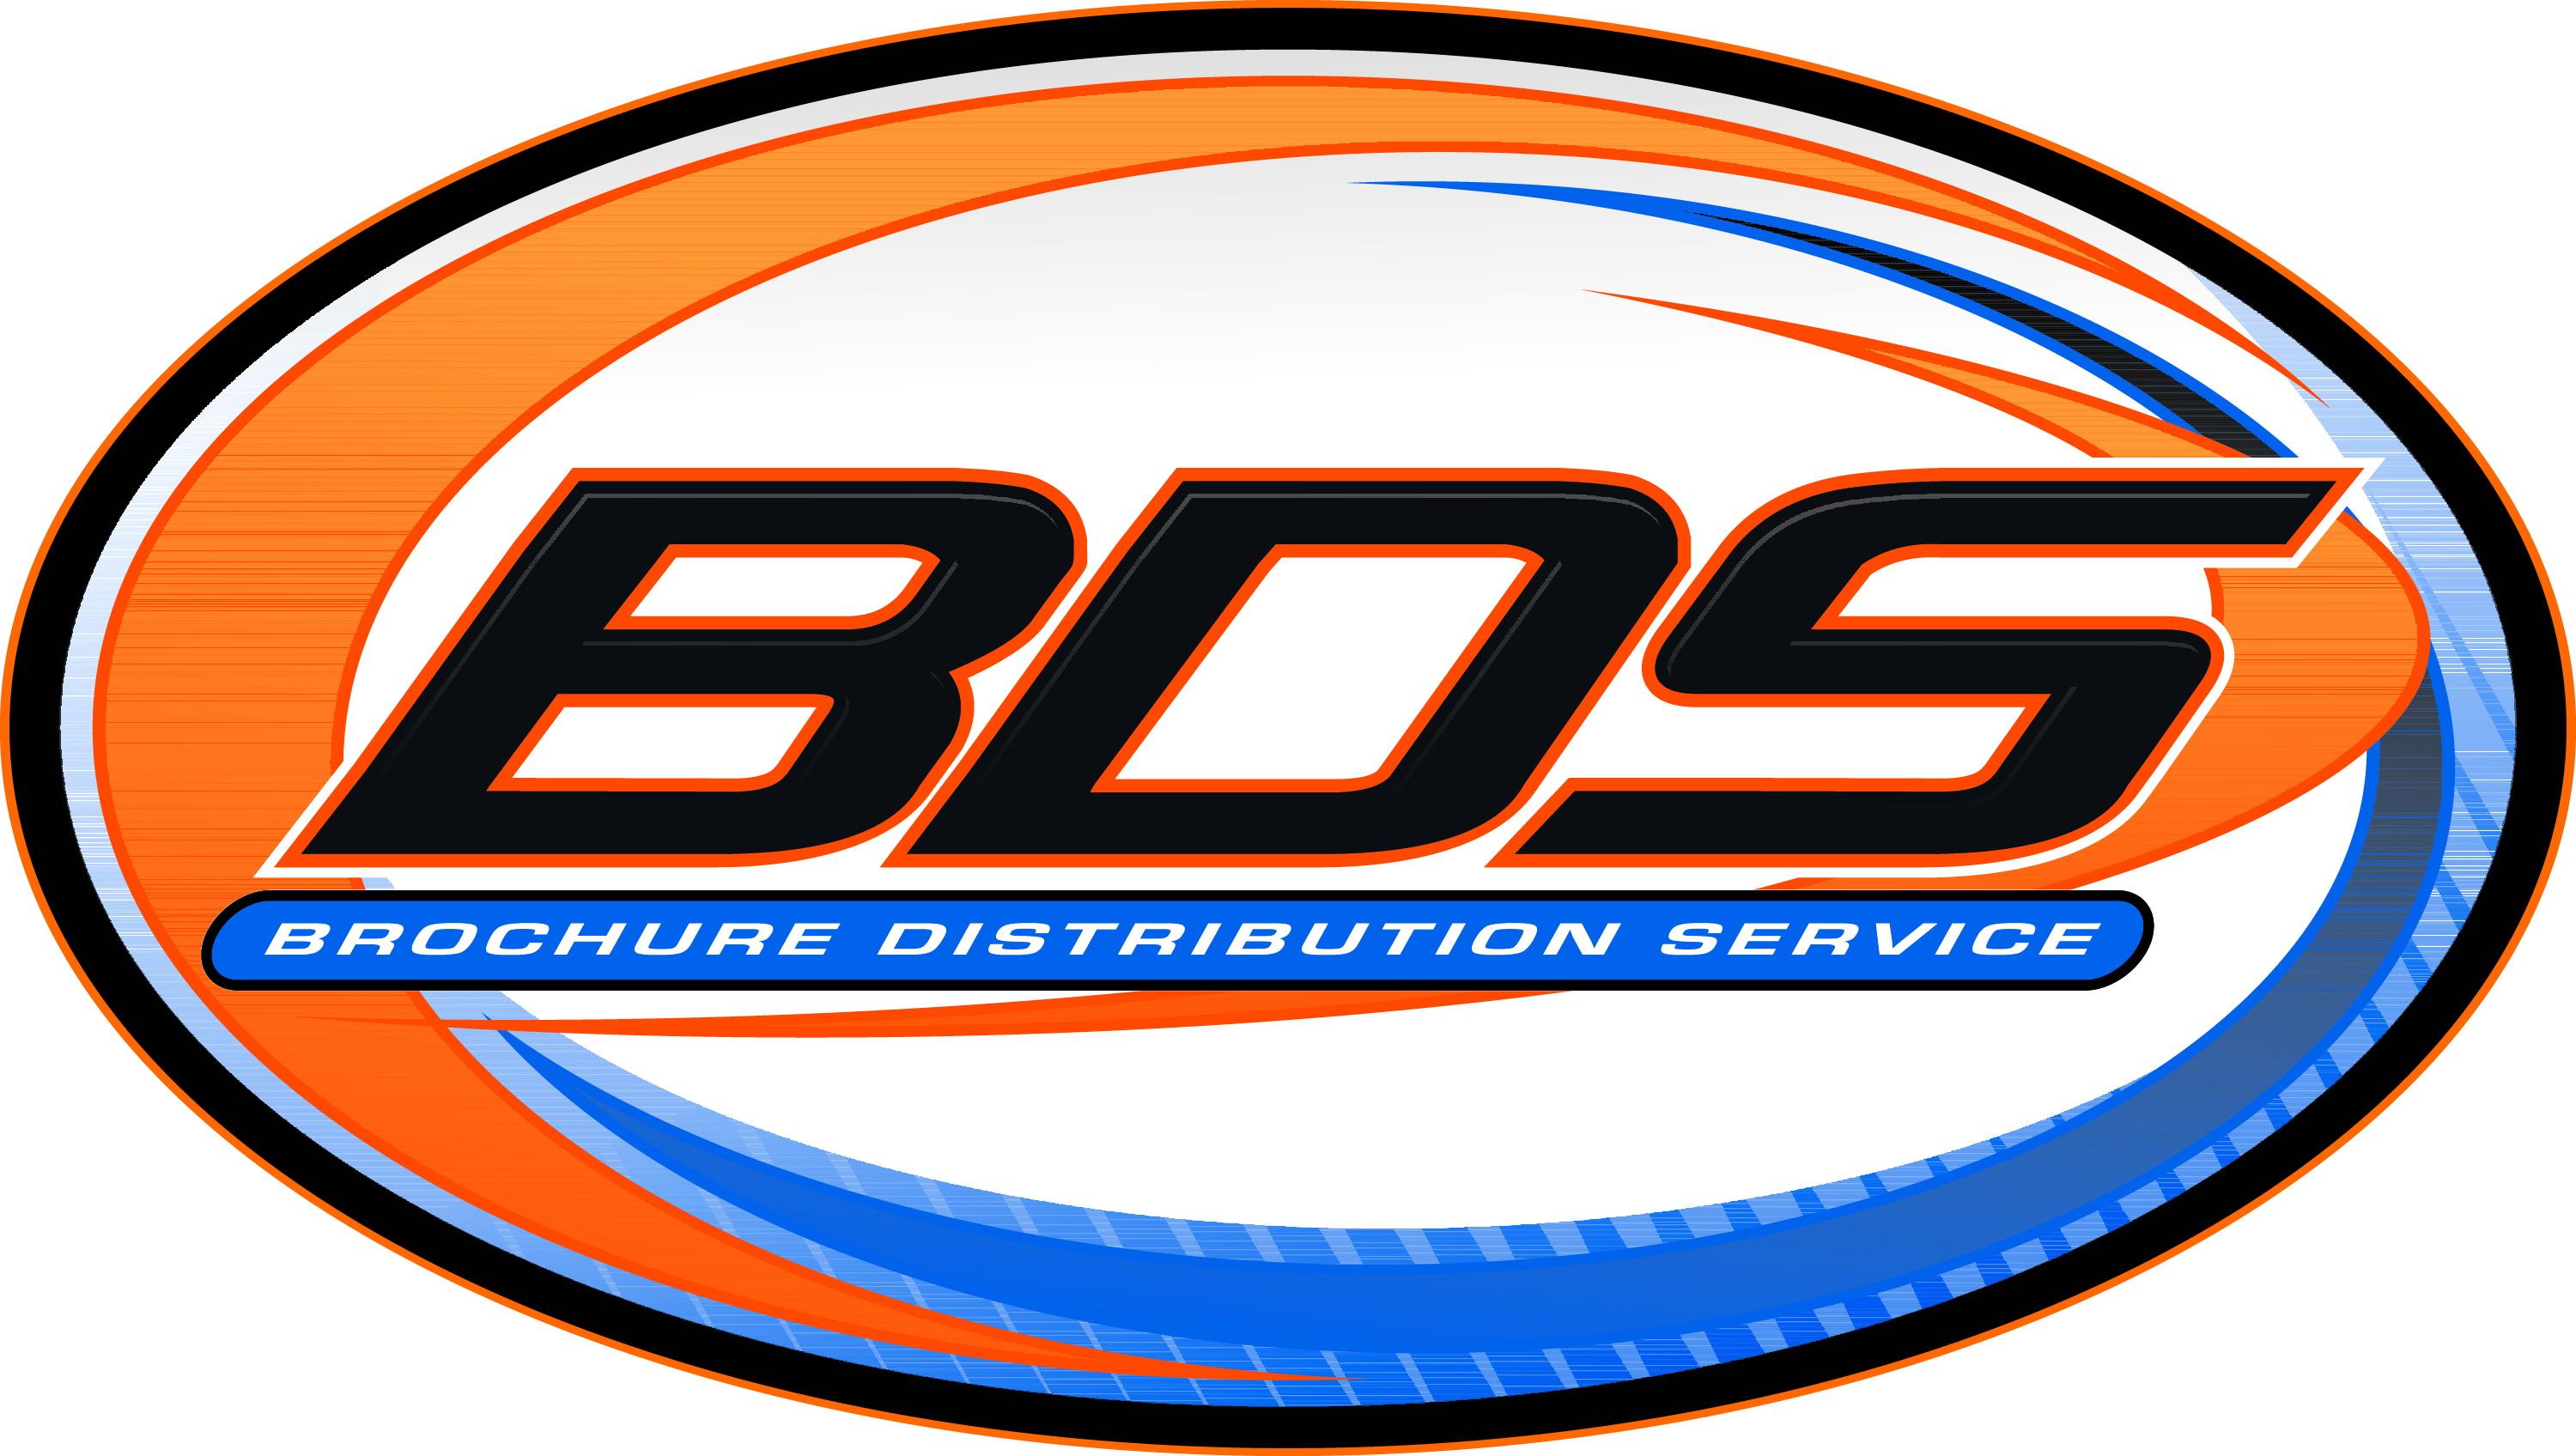 BDS Logo - usa-bds-bds-logo-vector-2013-oval - Visitor International